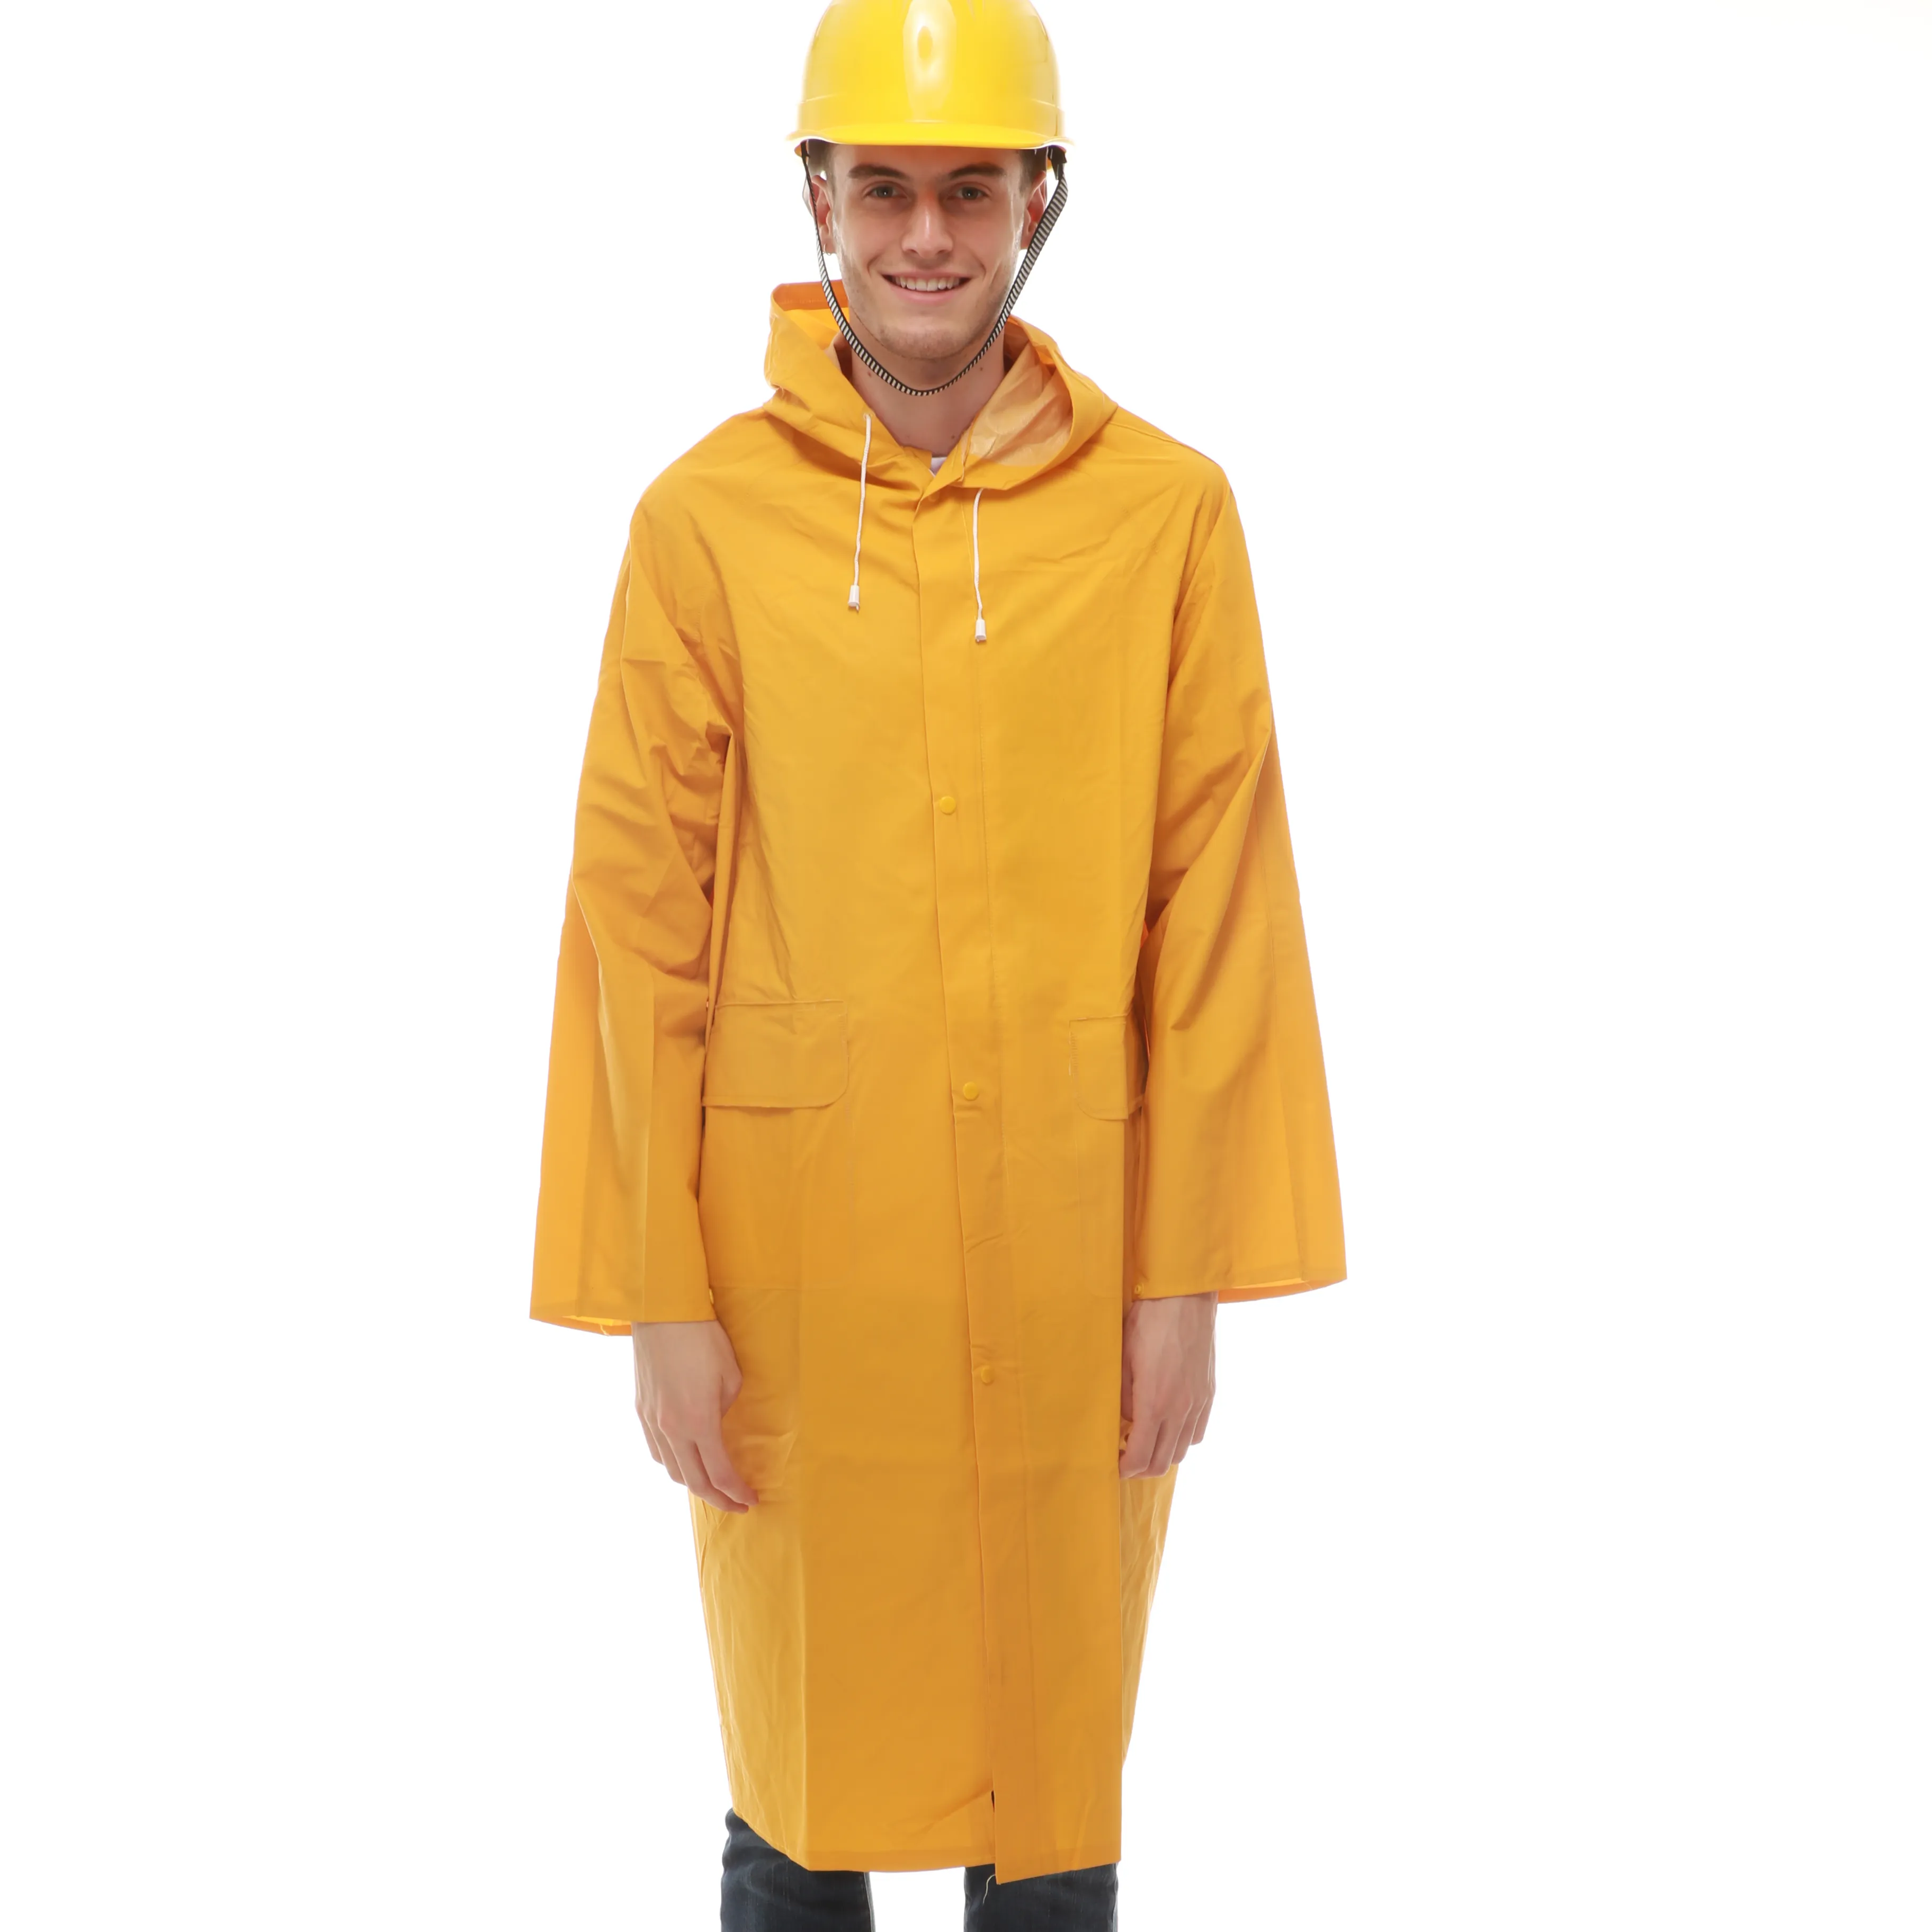 Yellow Raincoat Pvc Polyester Yellow Rain Coat Long Raincoat Rain Gear Waterproof Yellow Raincoat Long Jacket For Work